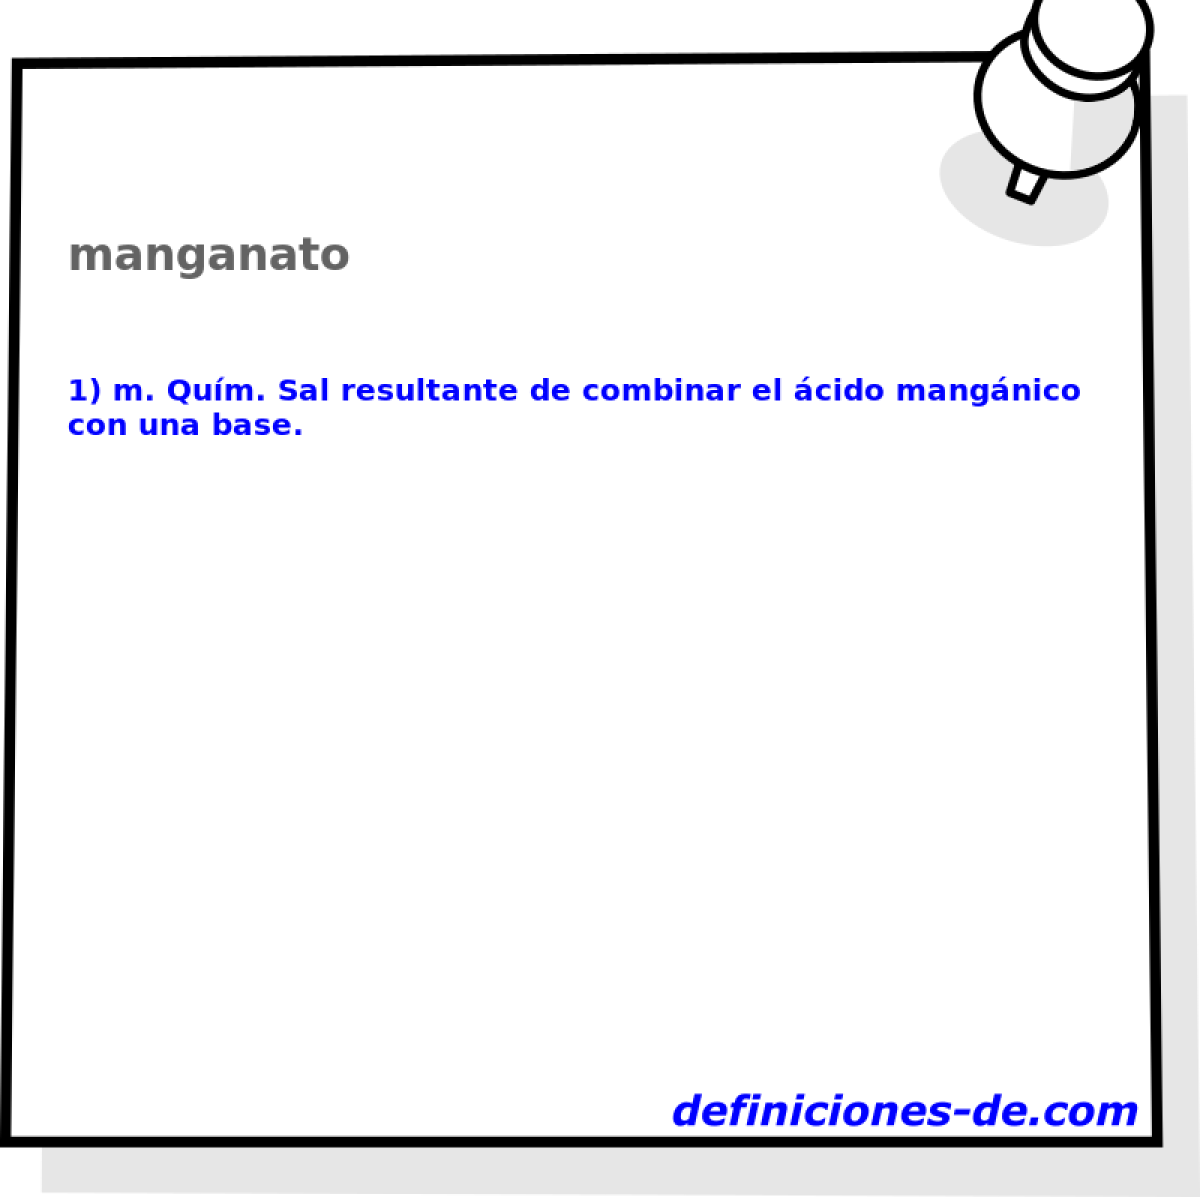 manganato 